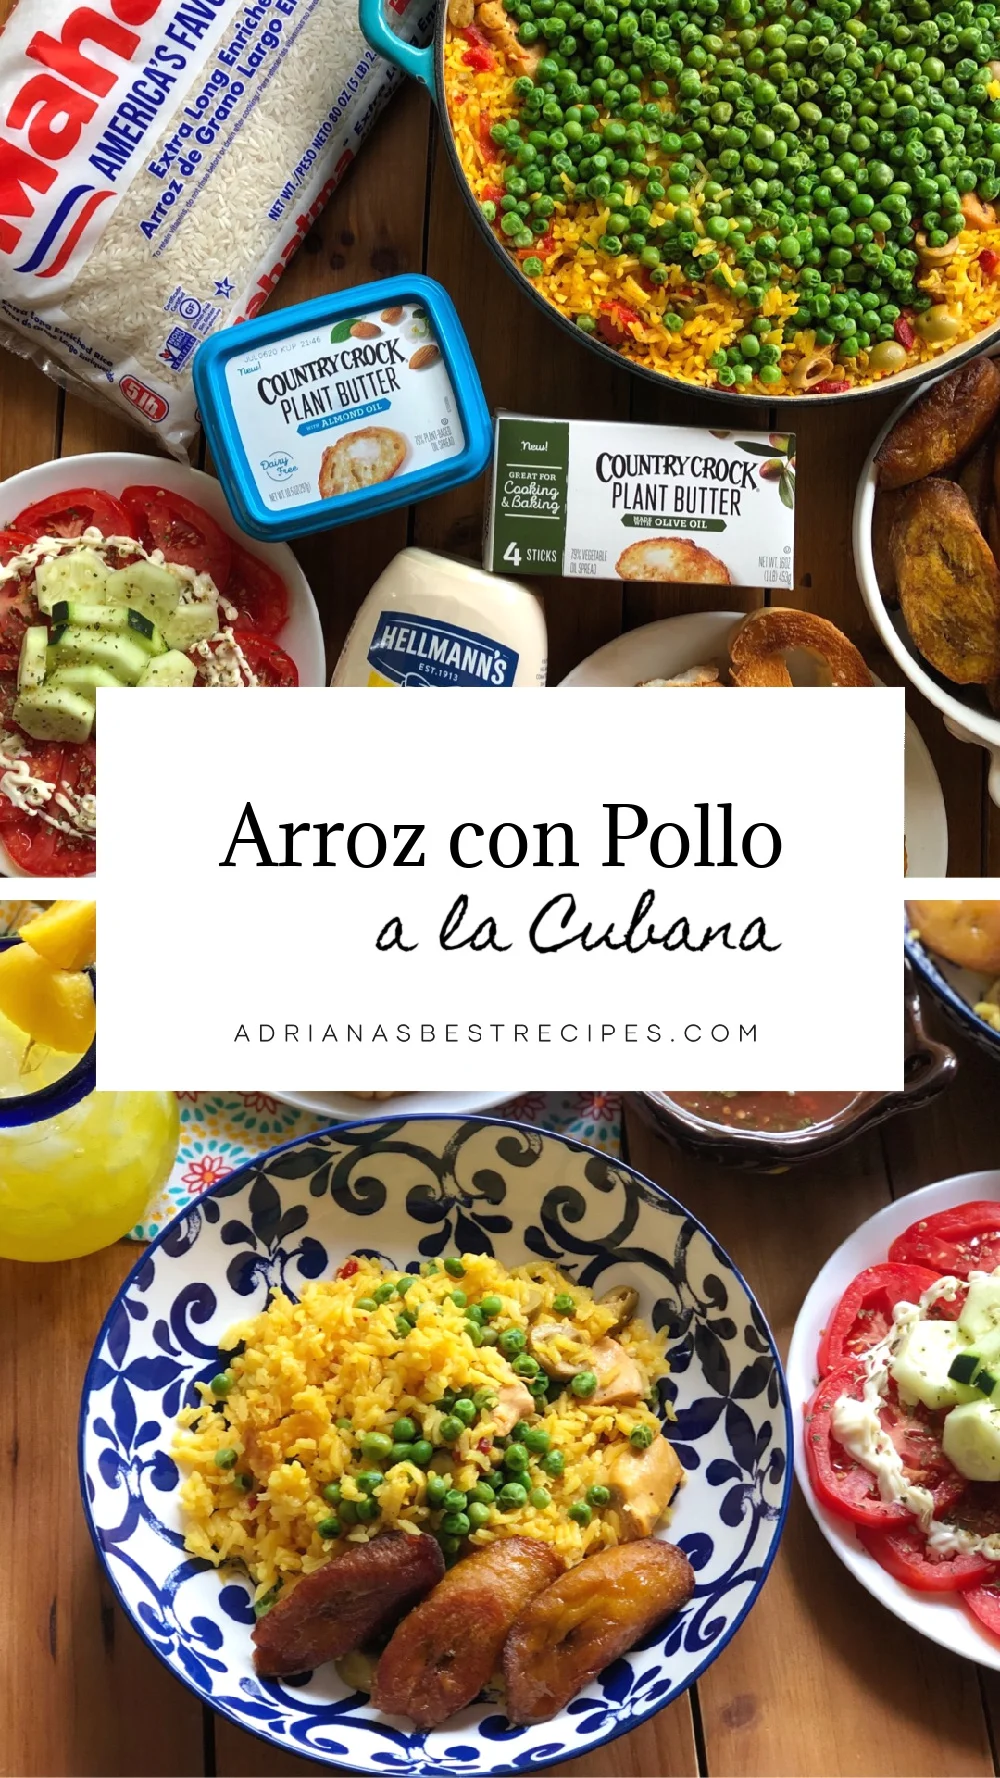 Arroz con Pollo a la Cubana - Adriana's Best Recipes